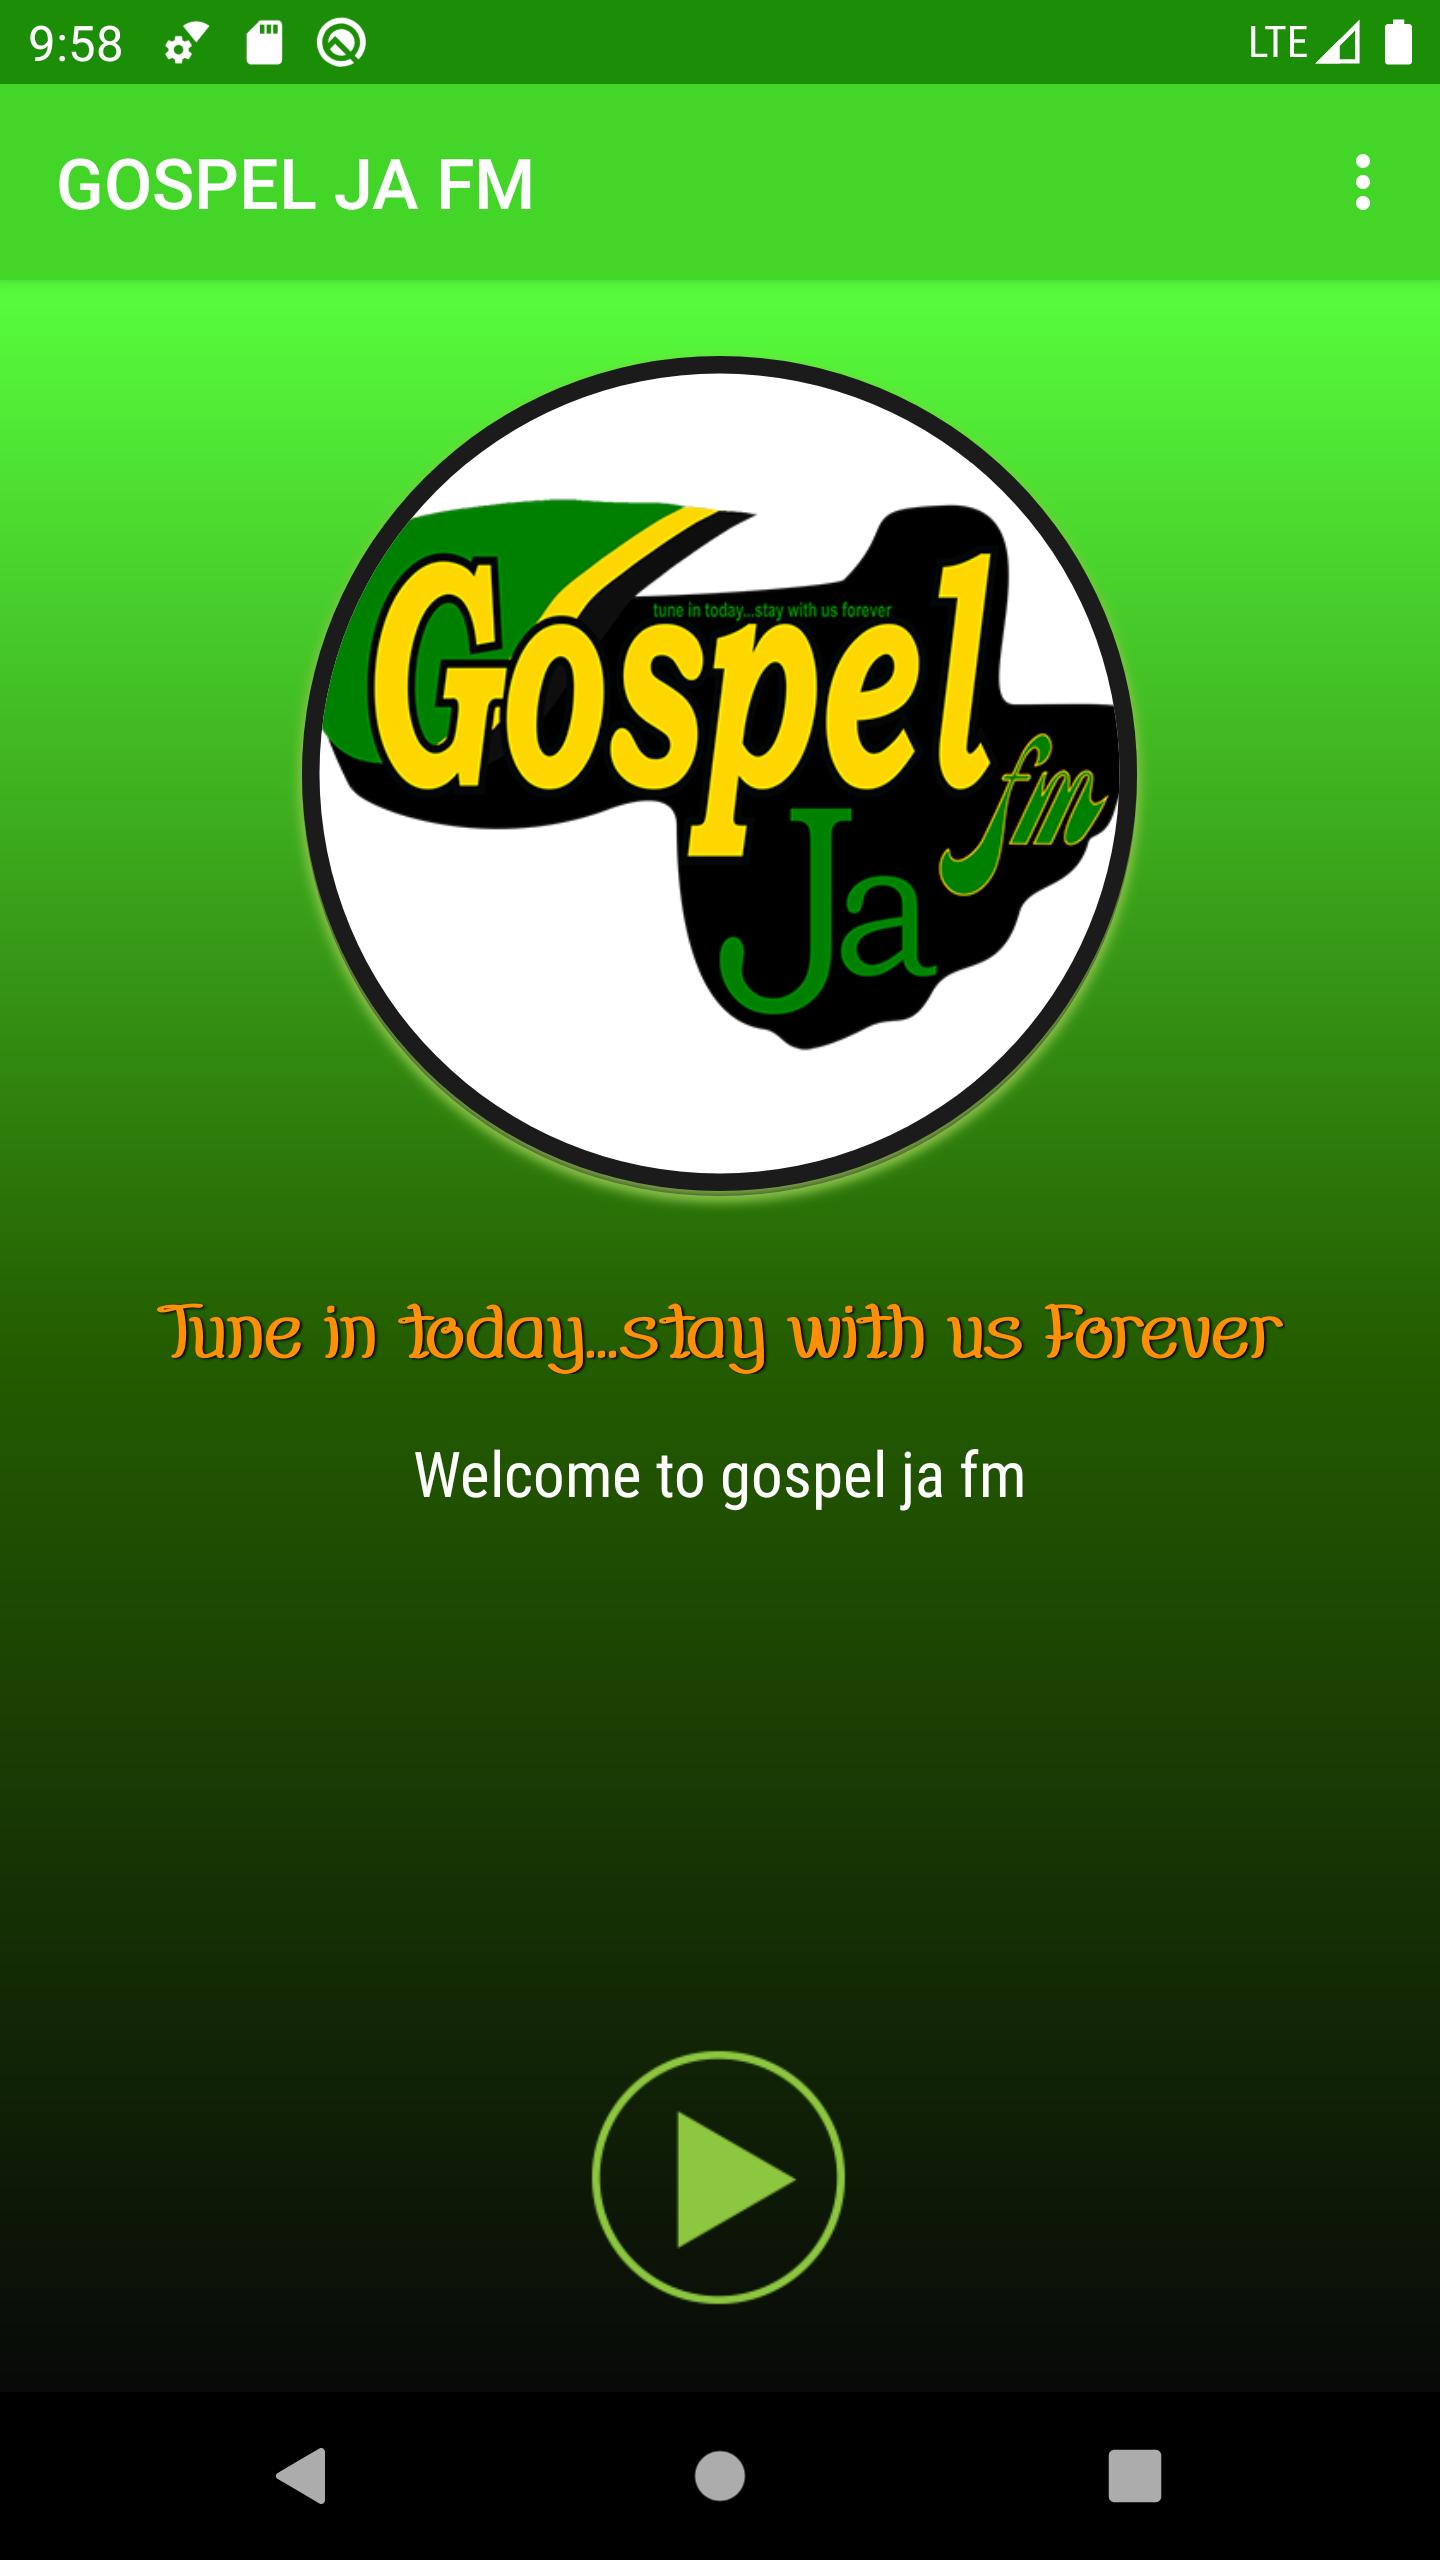 Gospel Ja 91.7 Radio Stream for Android - APK Download